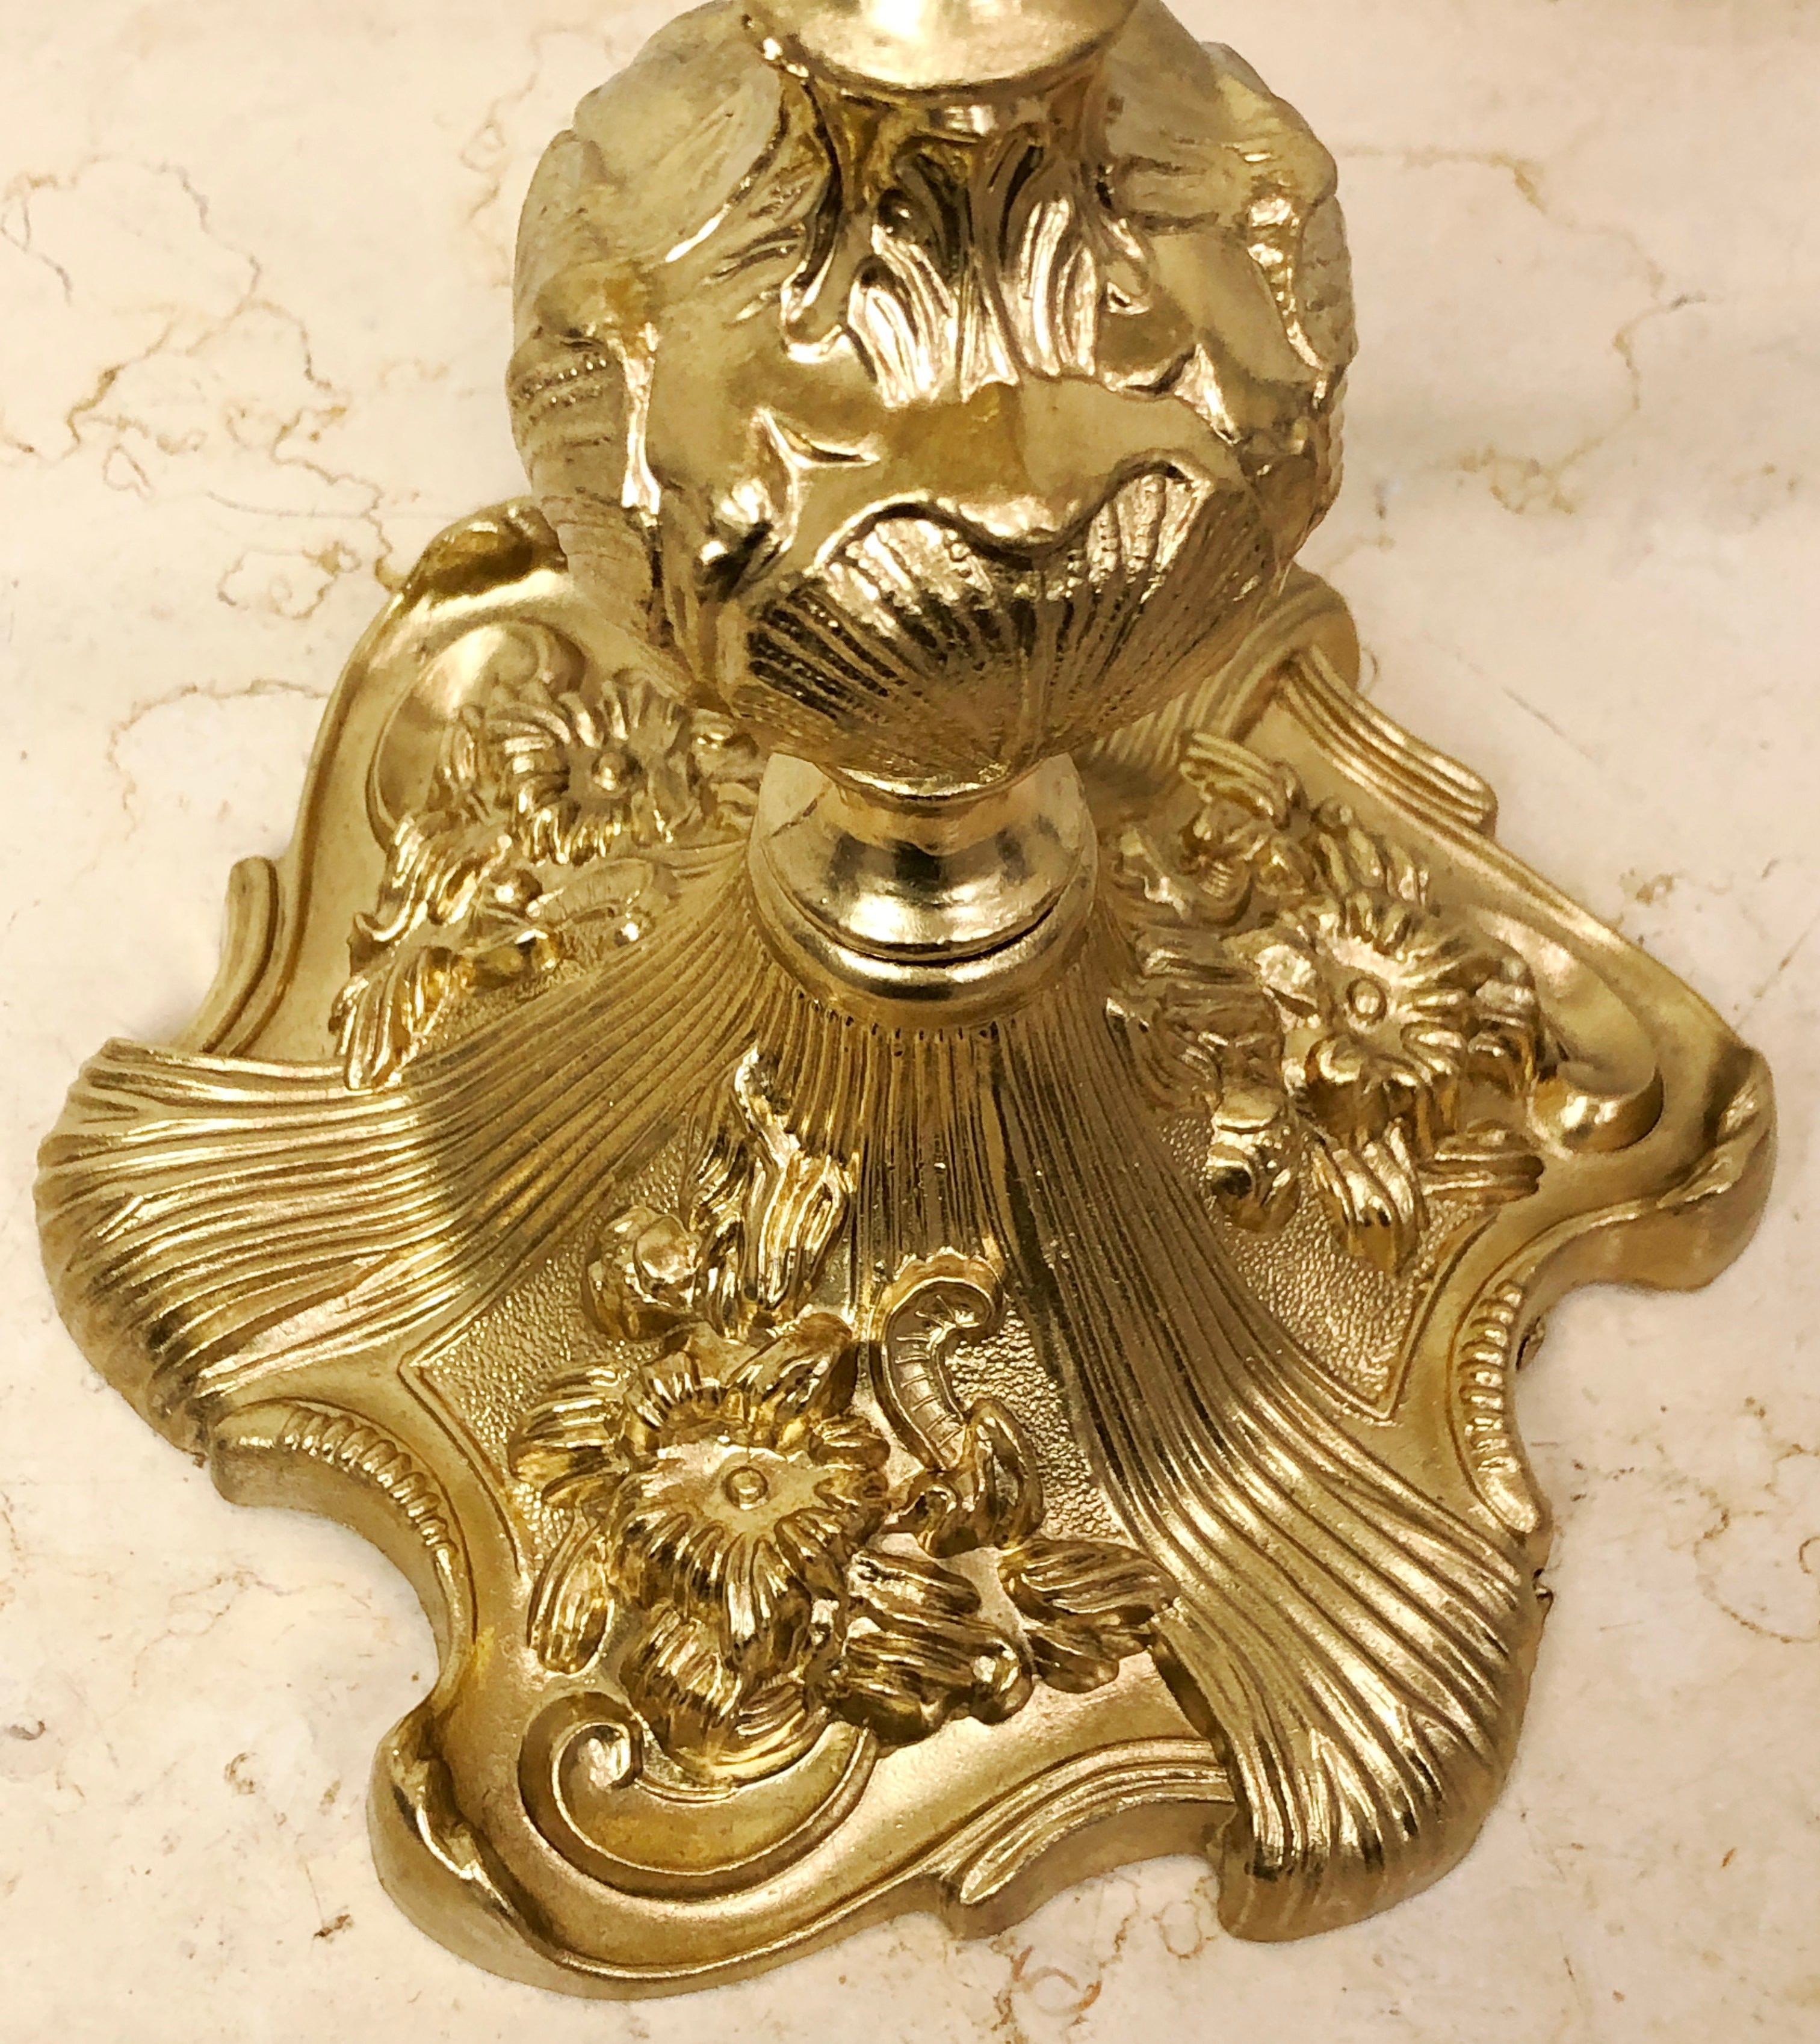 Vintage 3x Tier Brass Ornate Floral Candelabra | eXibit collection